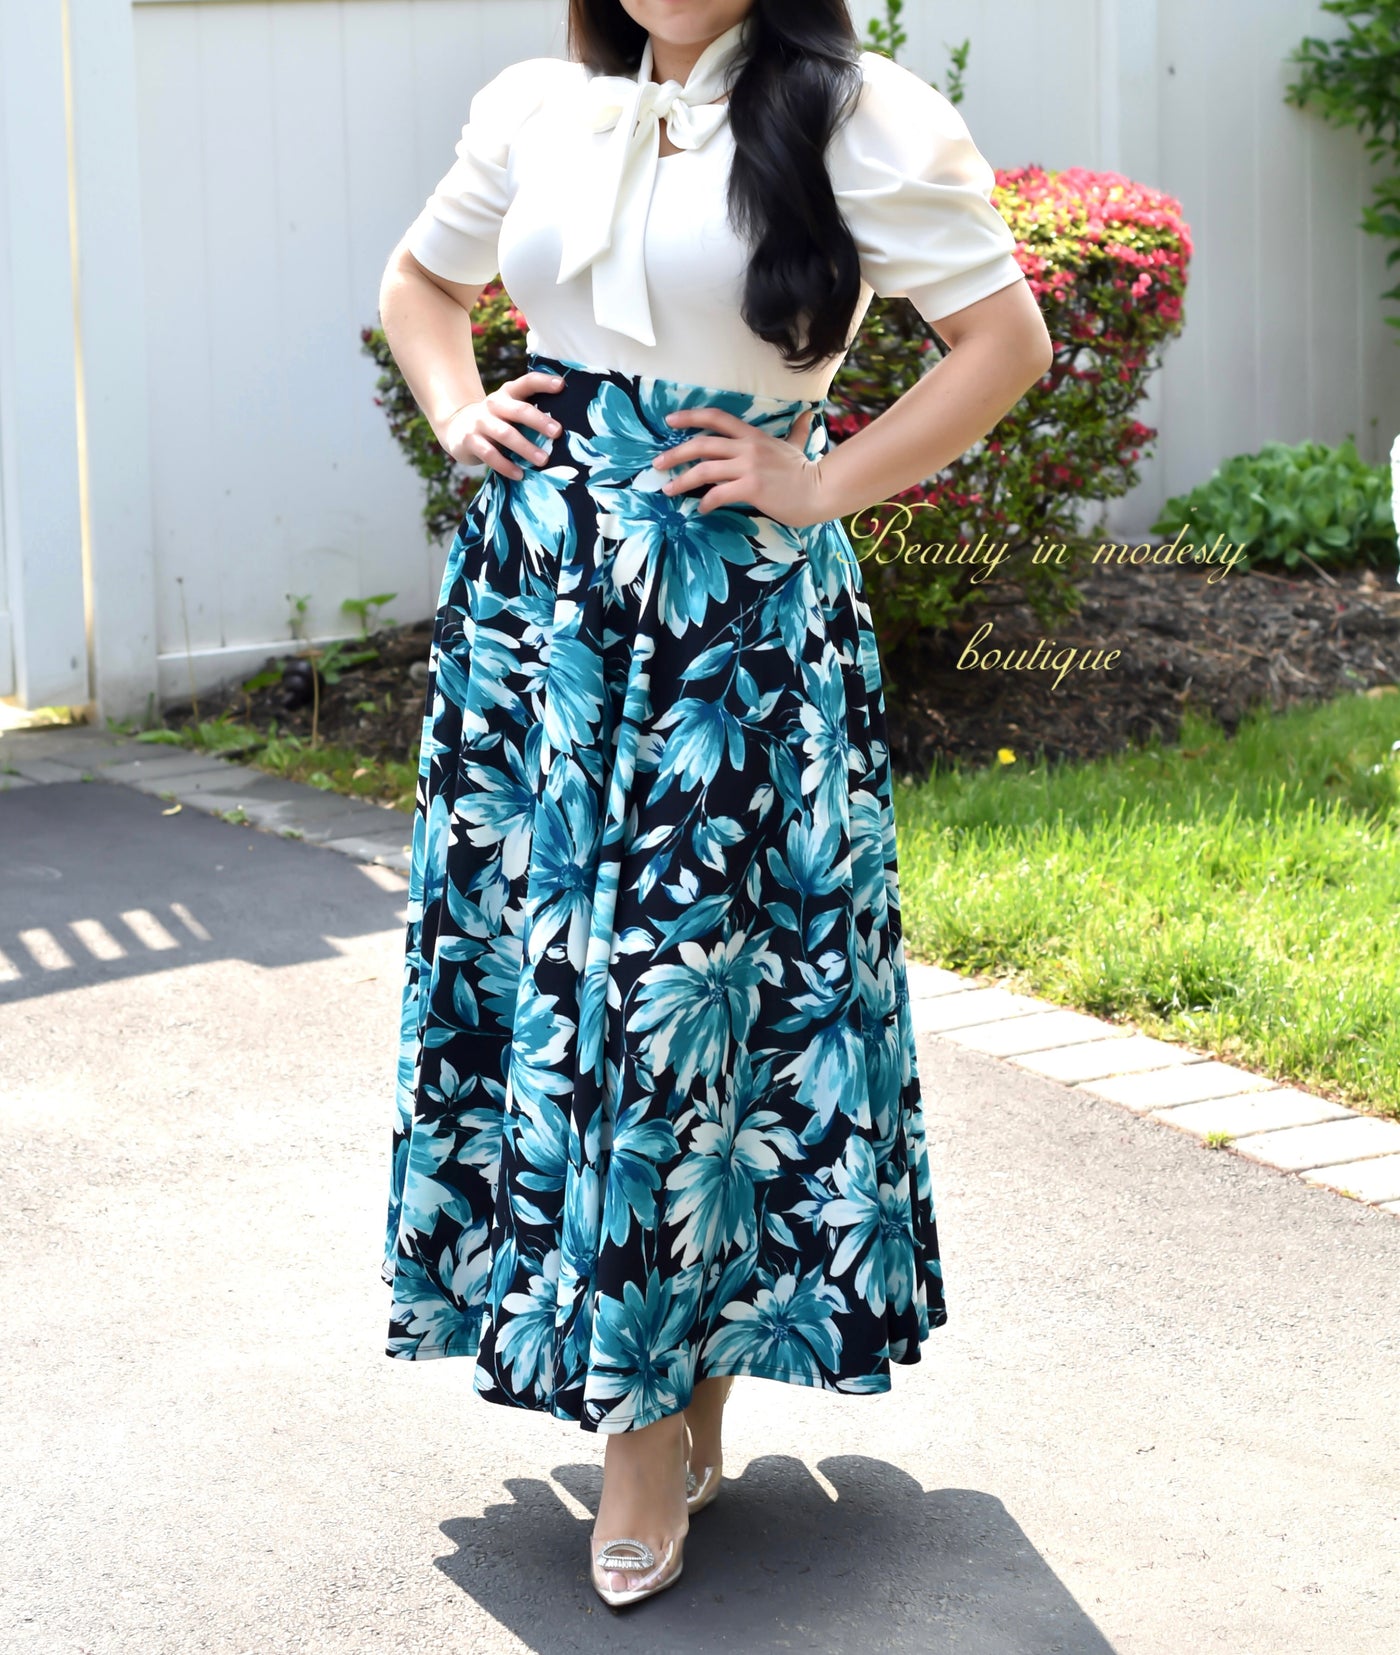 Teal Floral Maxi Skirt